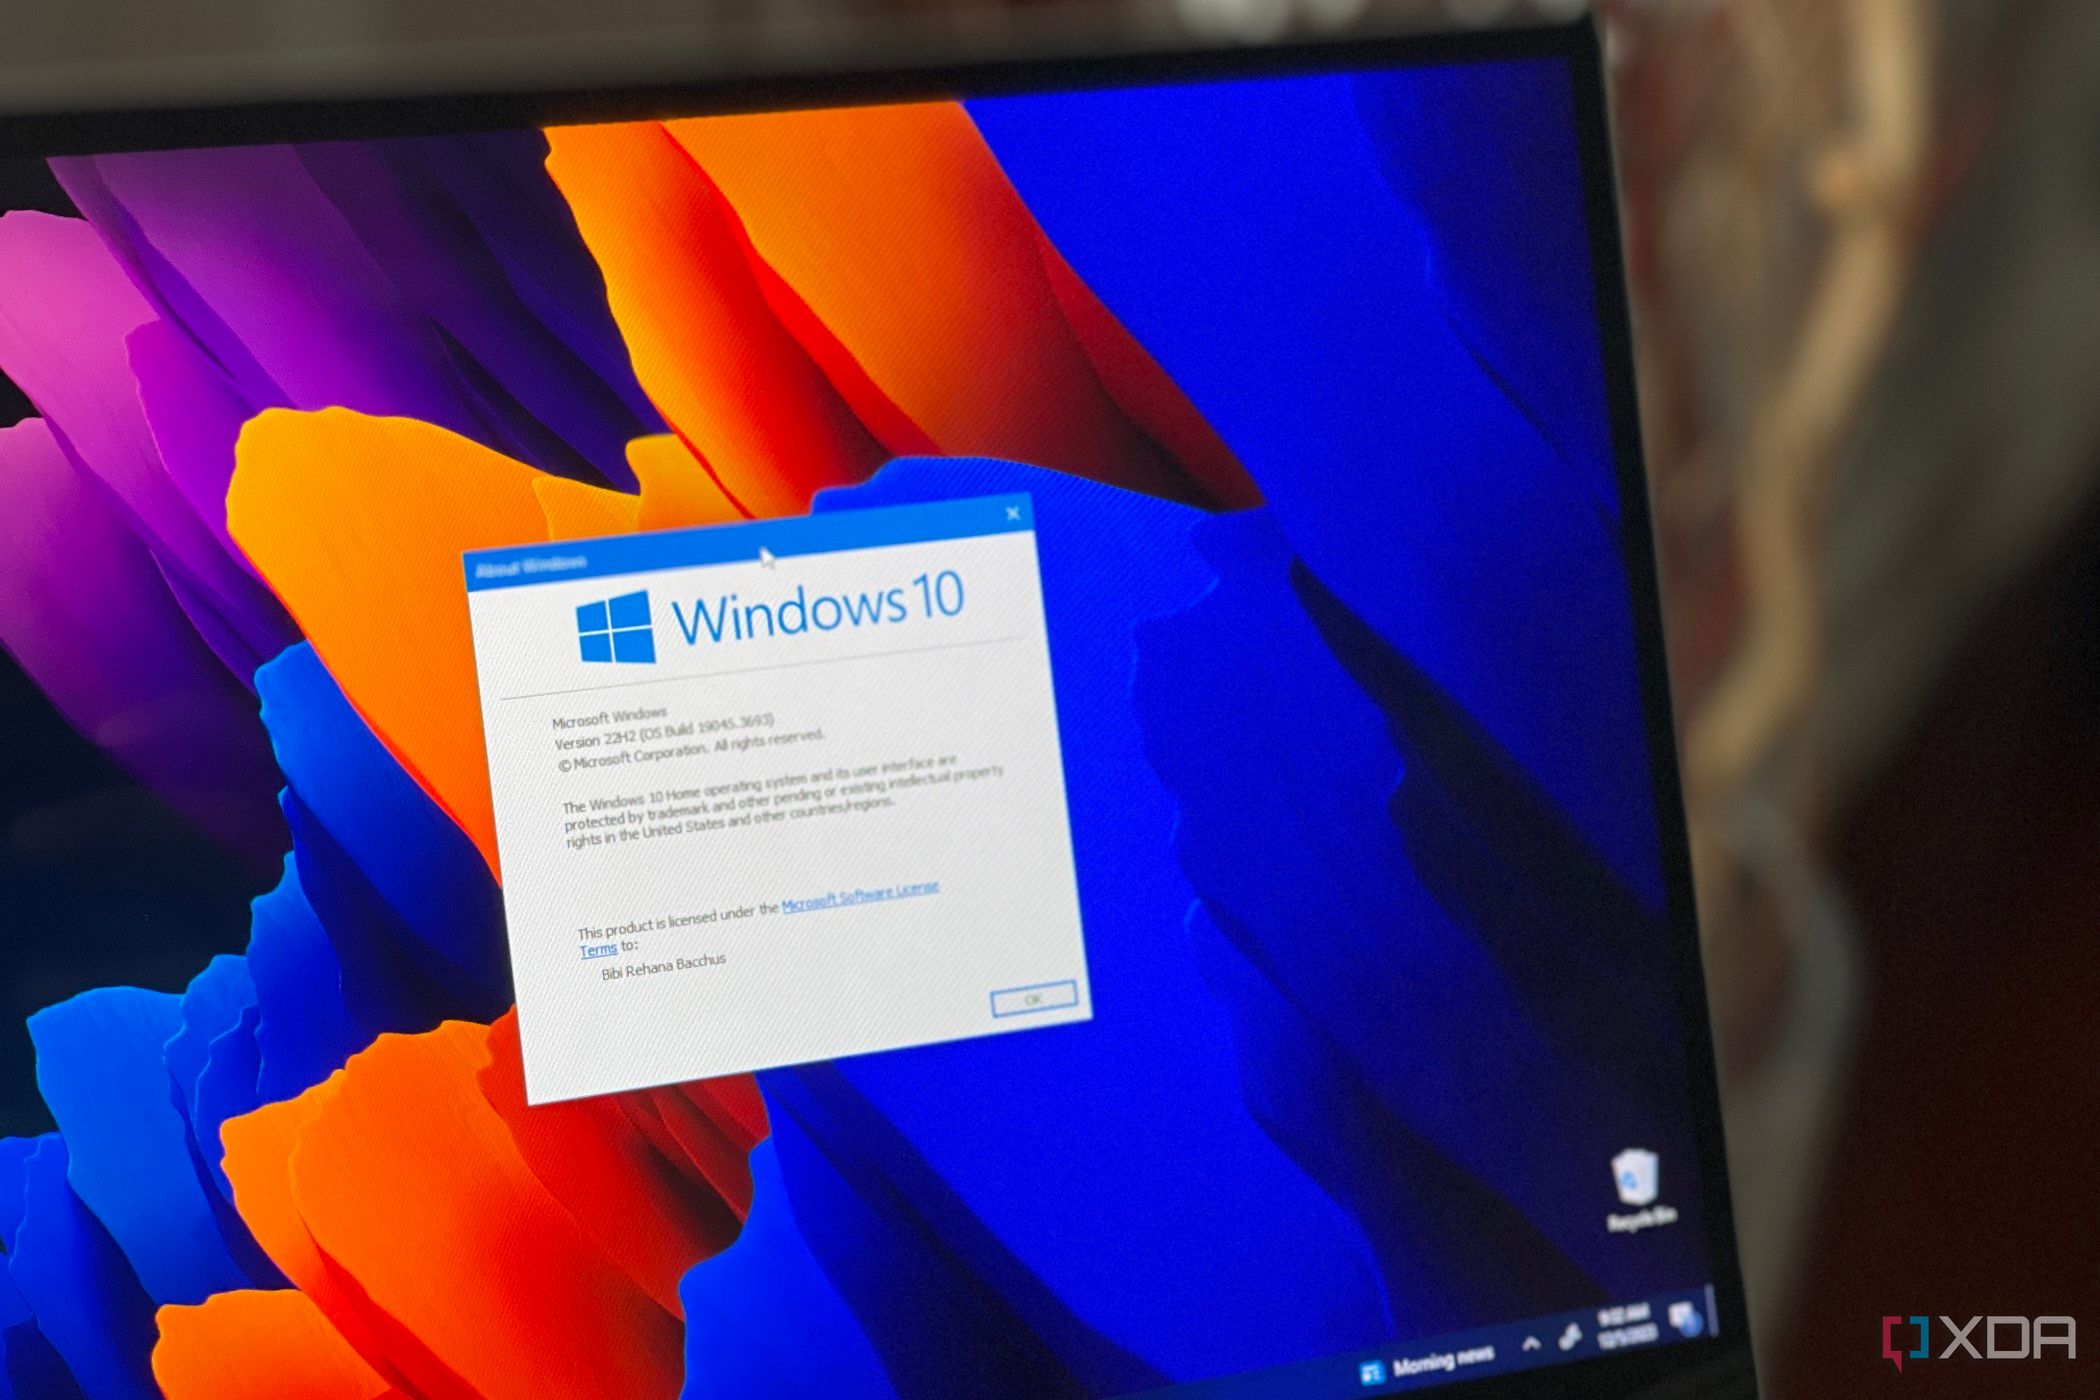 A photo of the Windows 10 logo on a Samsung laptop